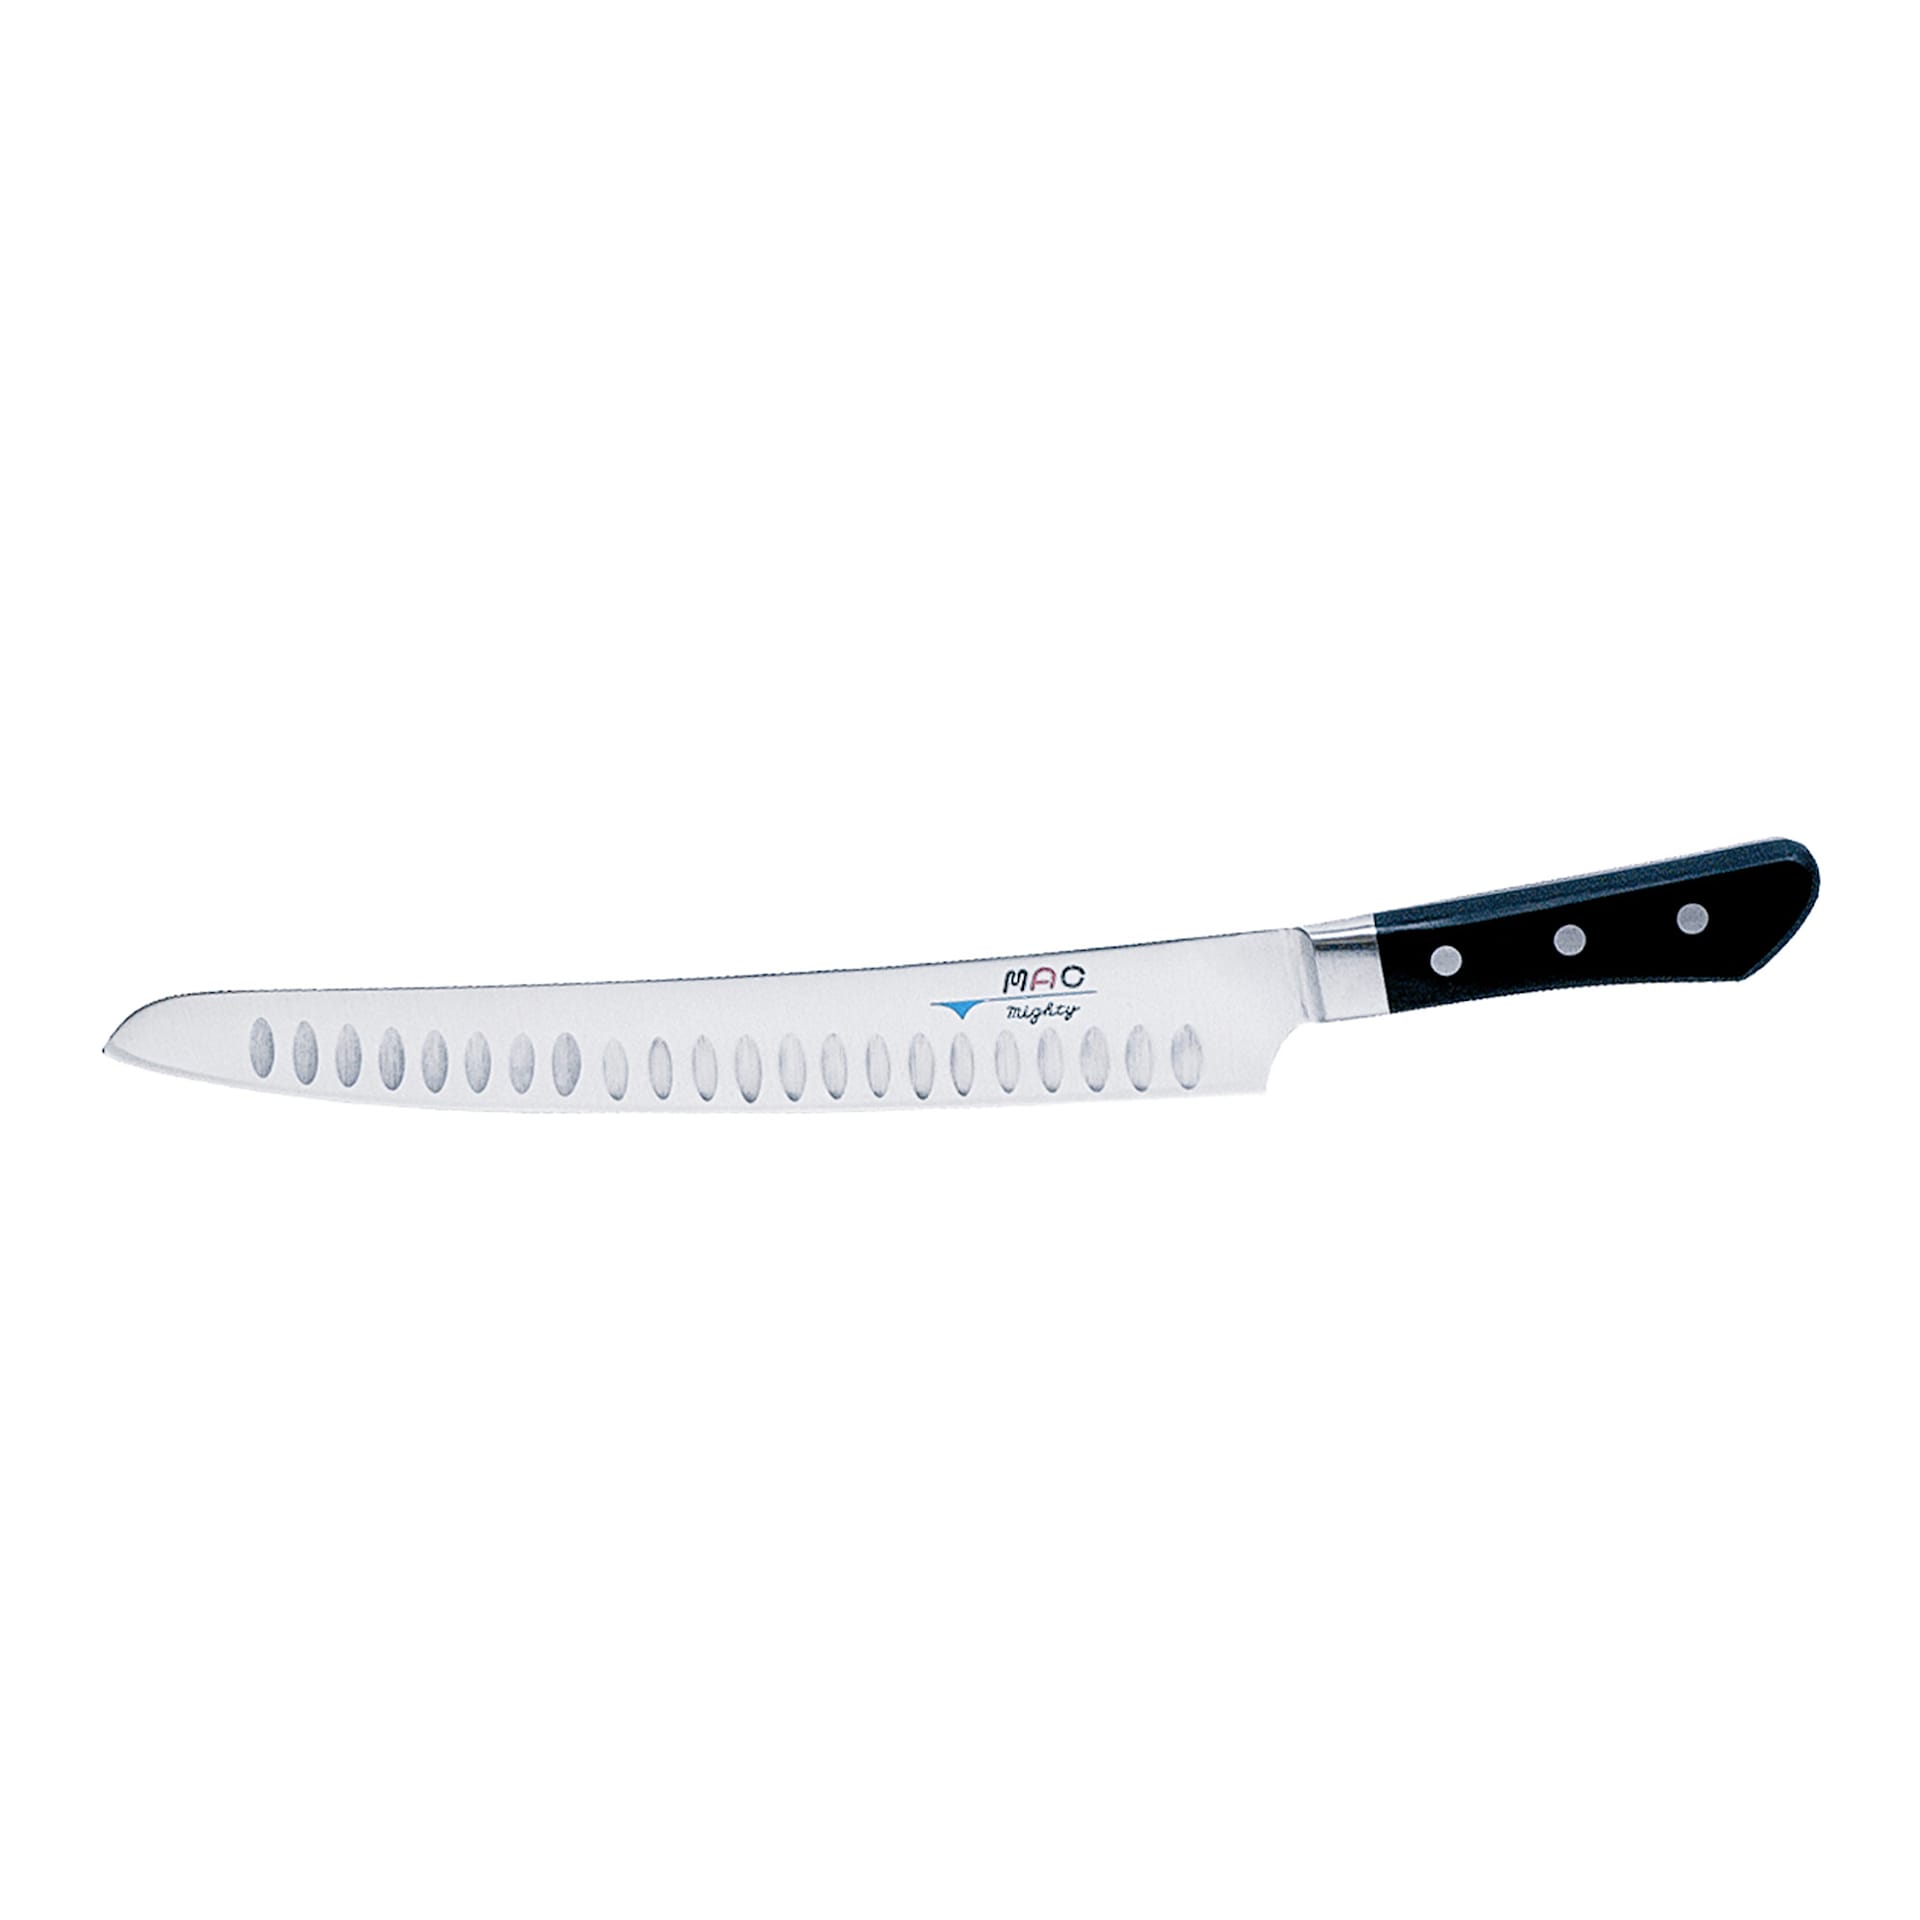 Mighty - Salmon knife, 27 cm - MAC - NO GA